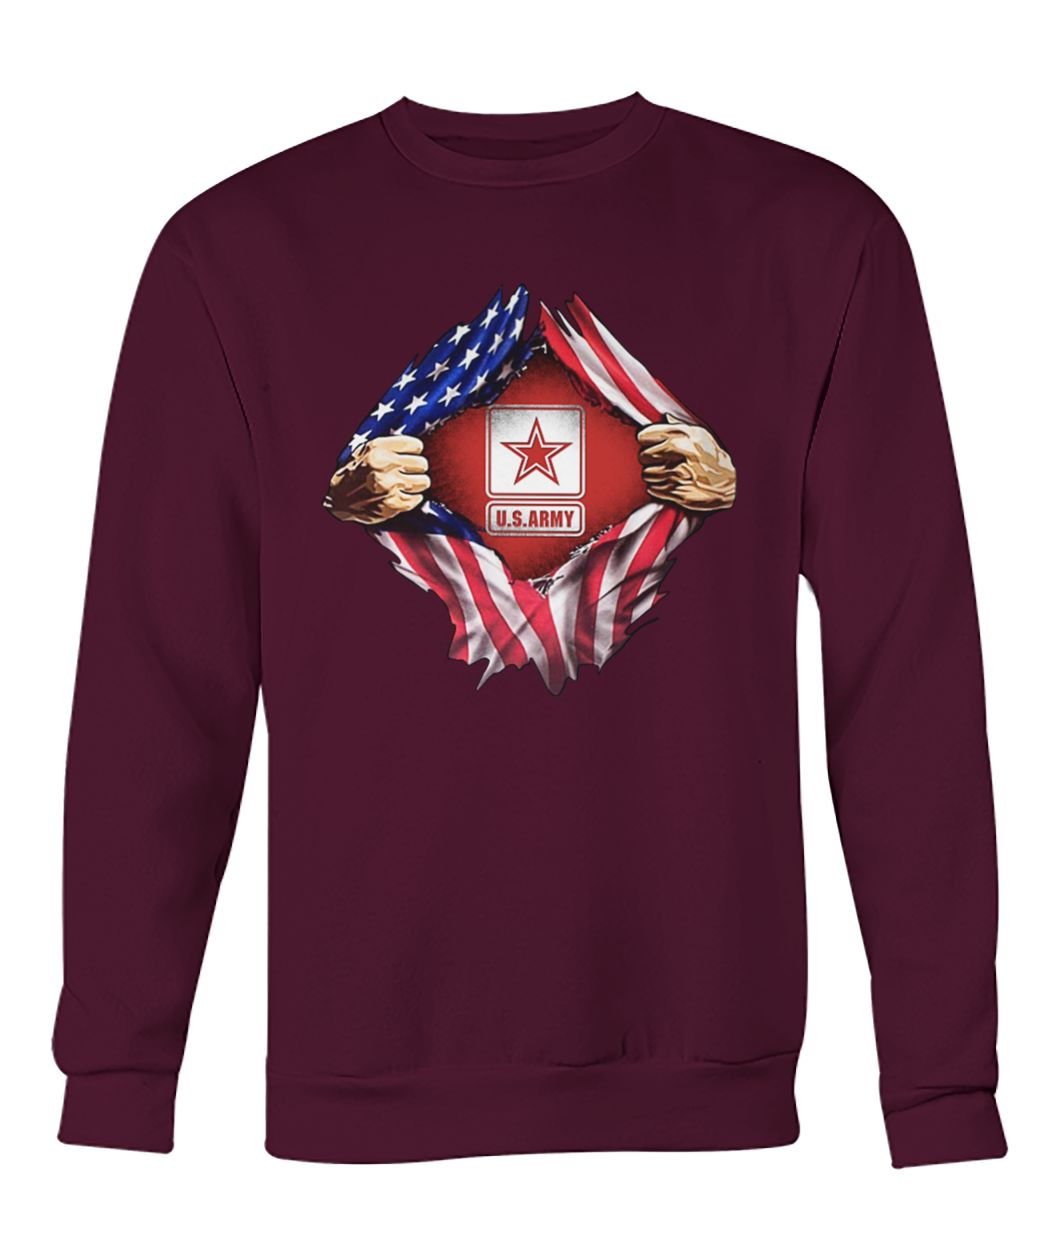 U S Army inside me american flag crew neck sweatshirt